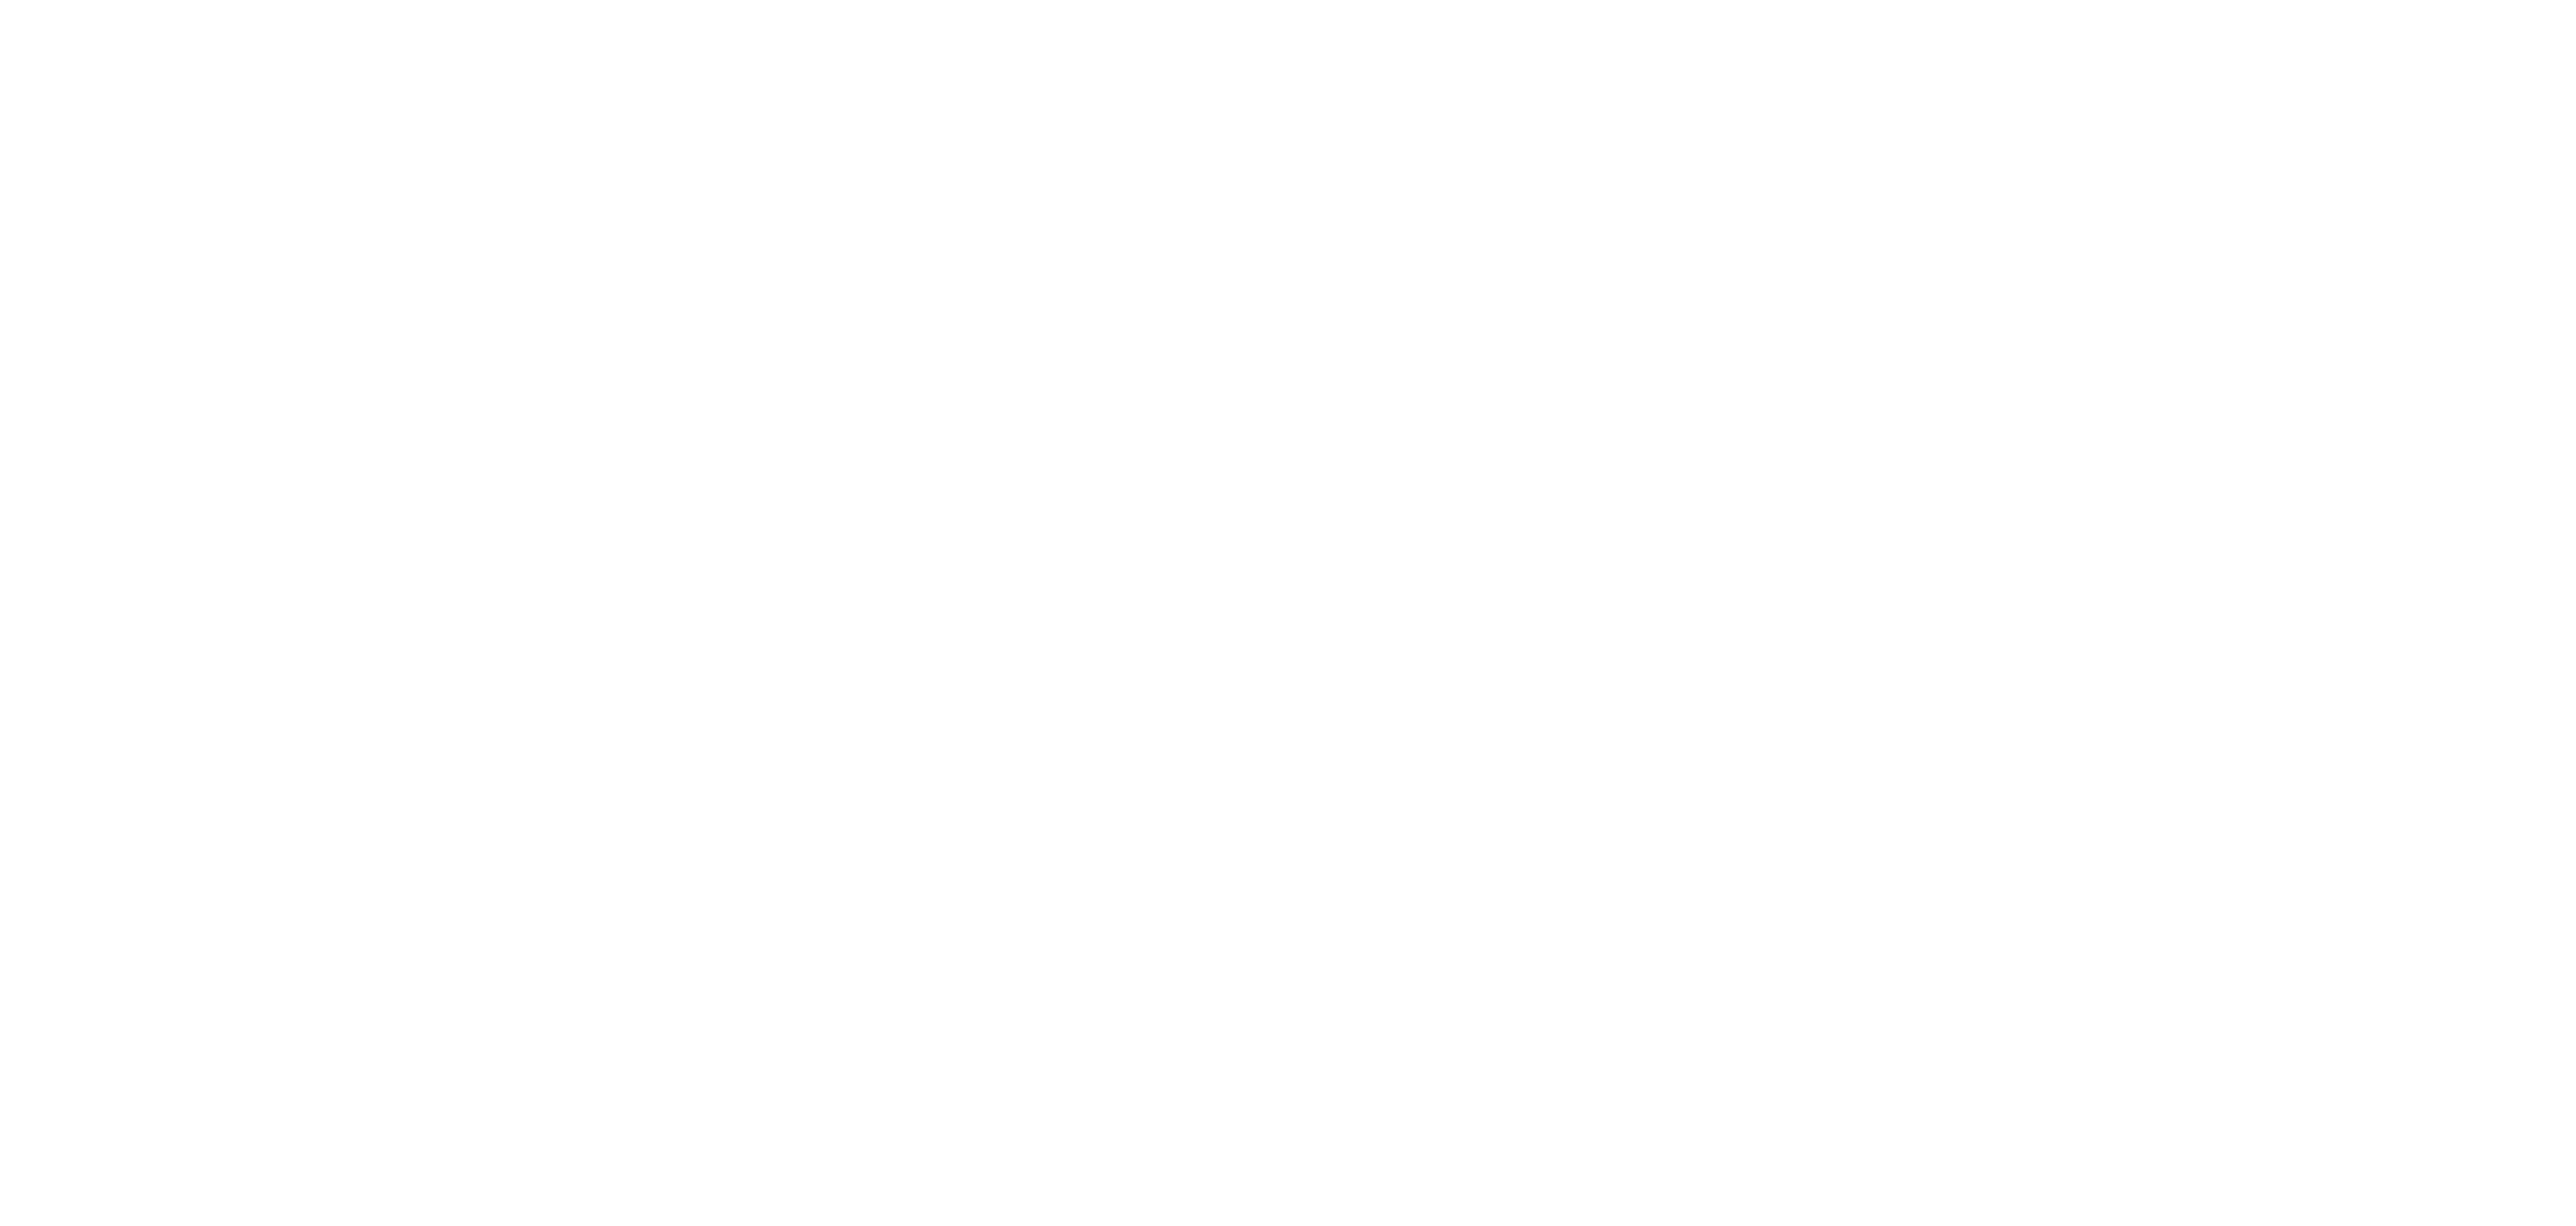 v8 performance